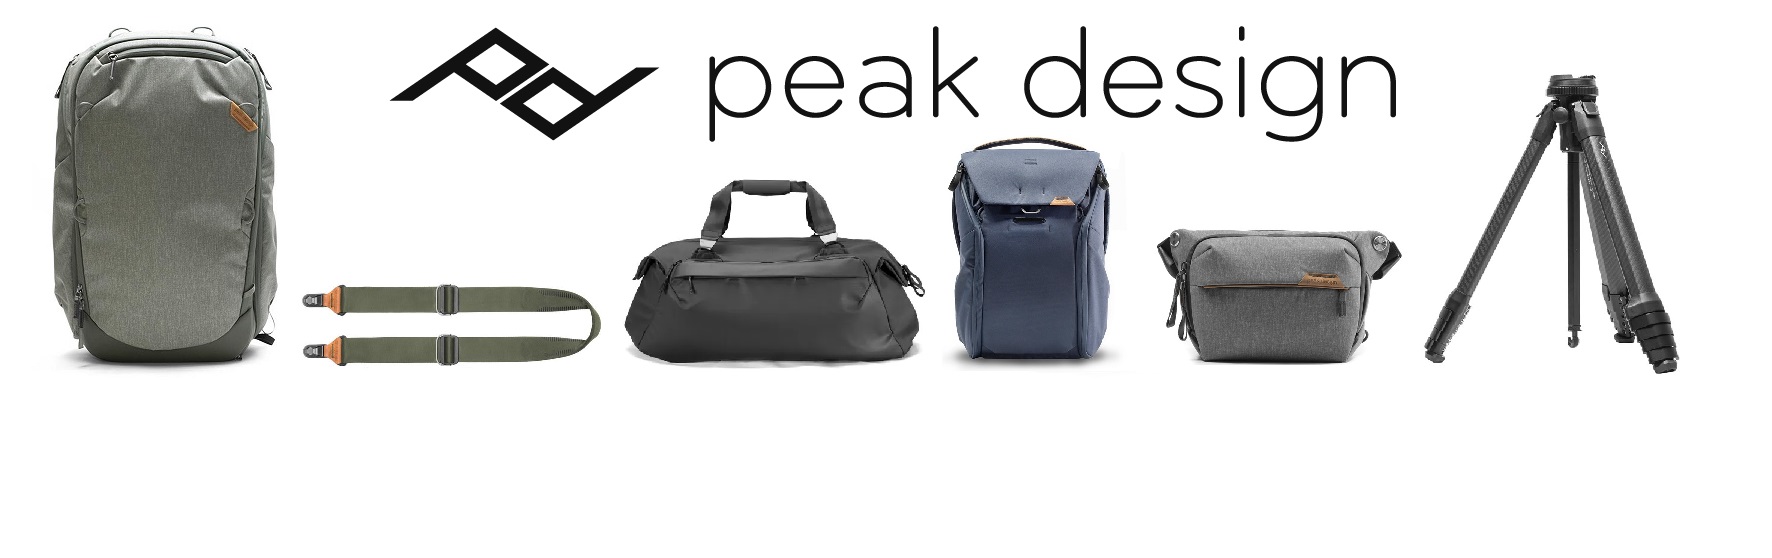 Peak Design Available Here!